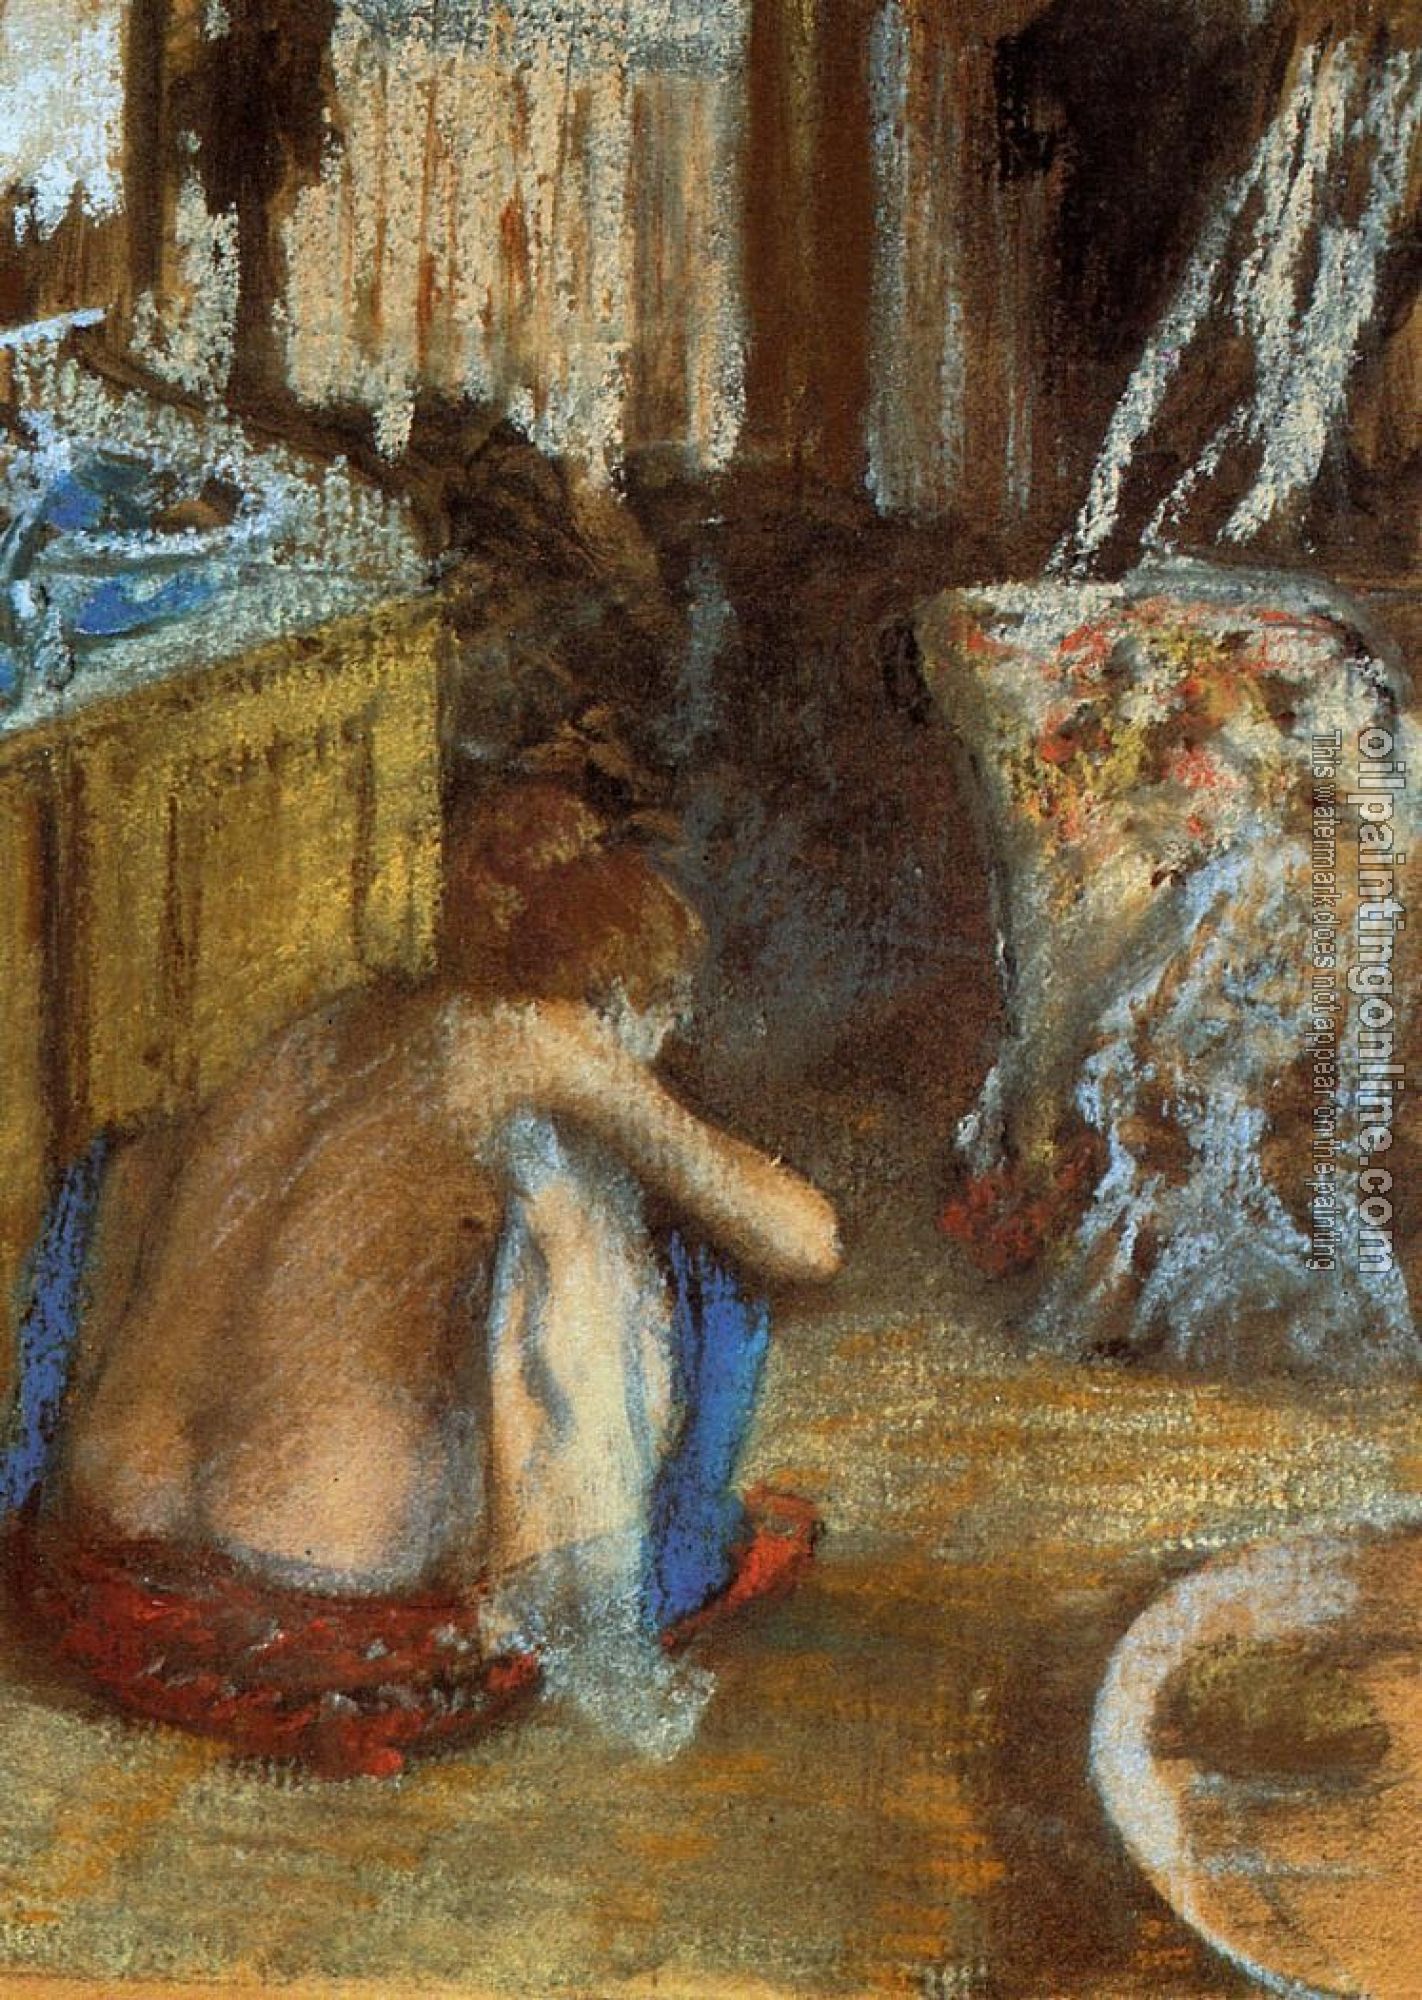 Degas, Edgar - Woman Squatting